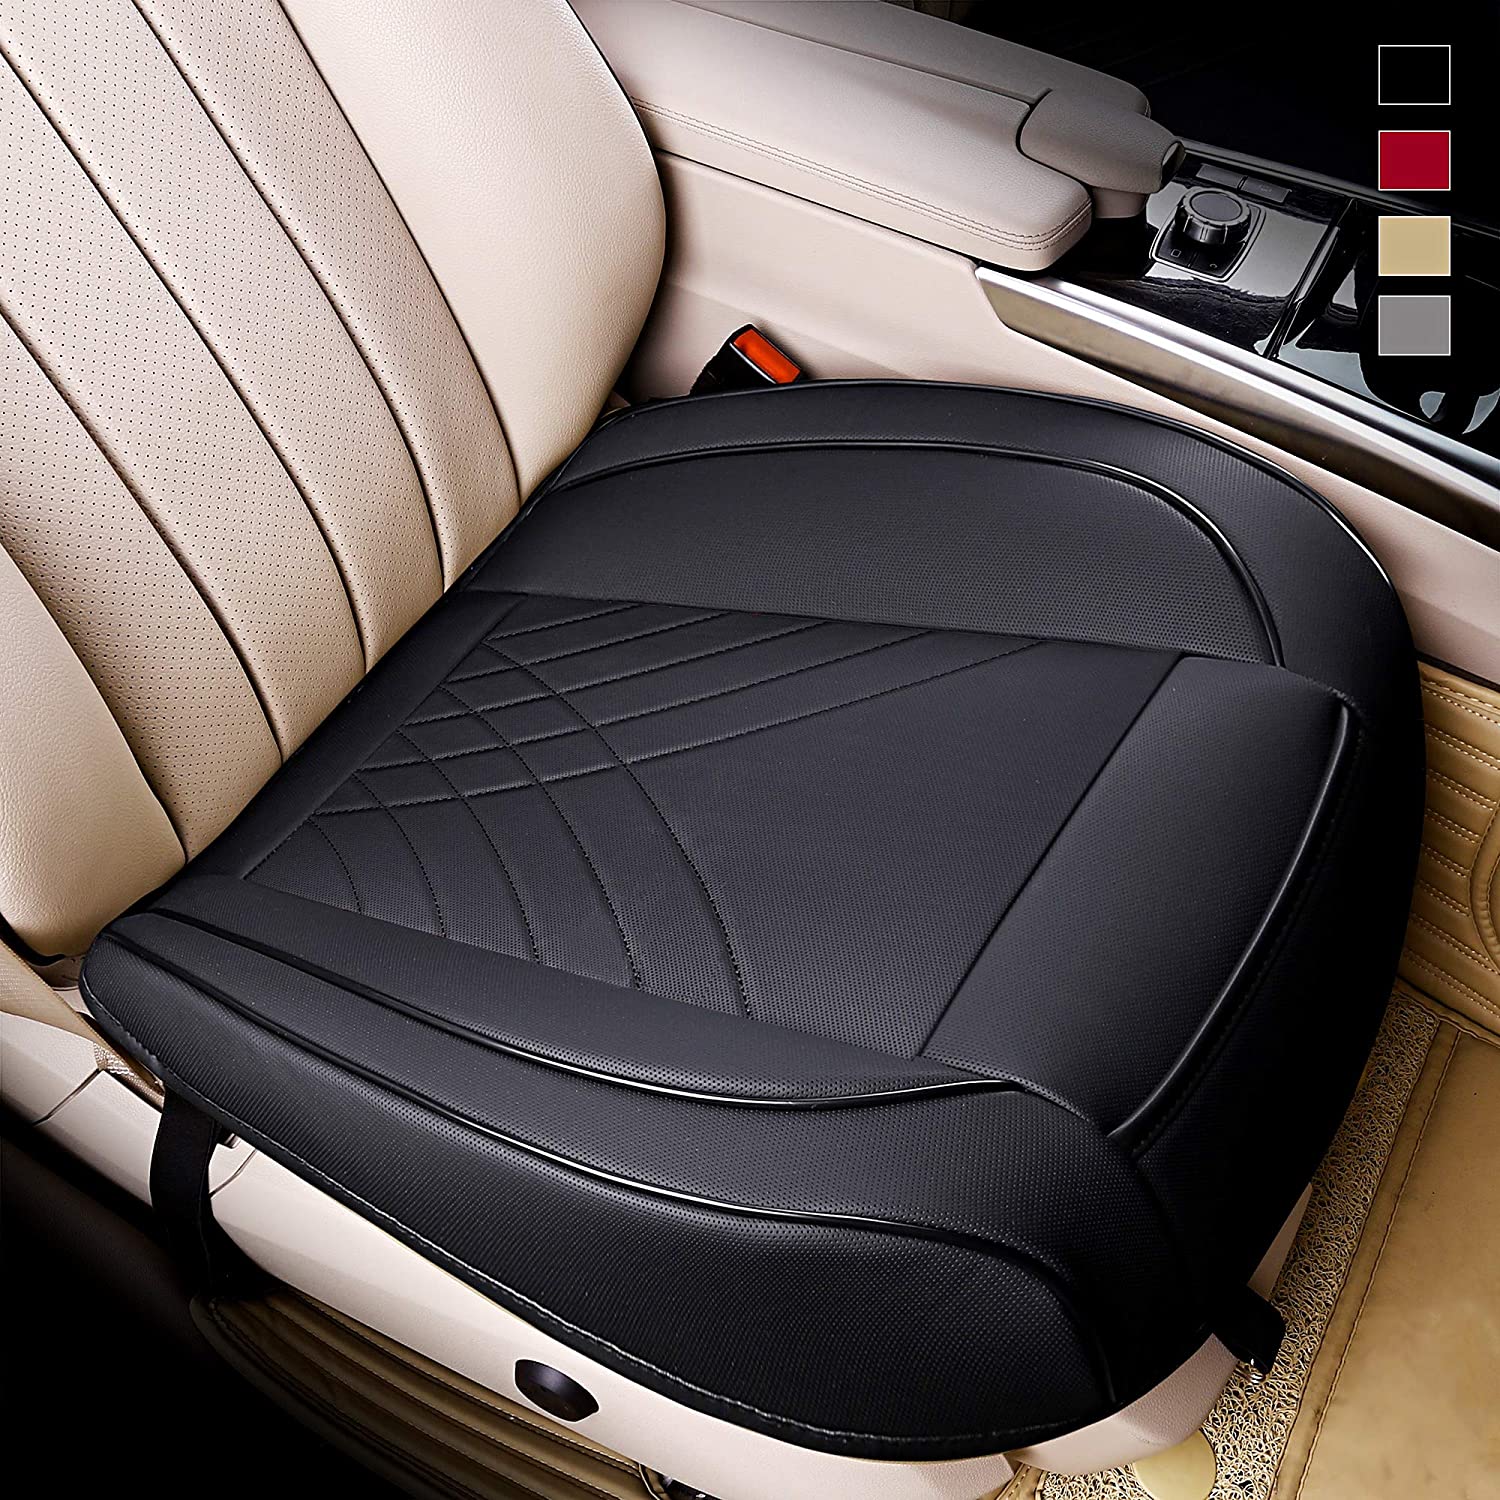 Promote Sale price kingphenix Premium Car Seat Cushion, Memory